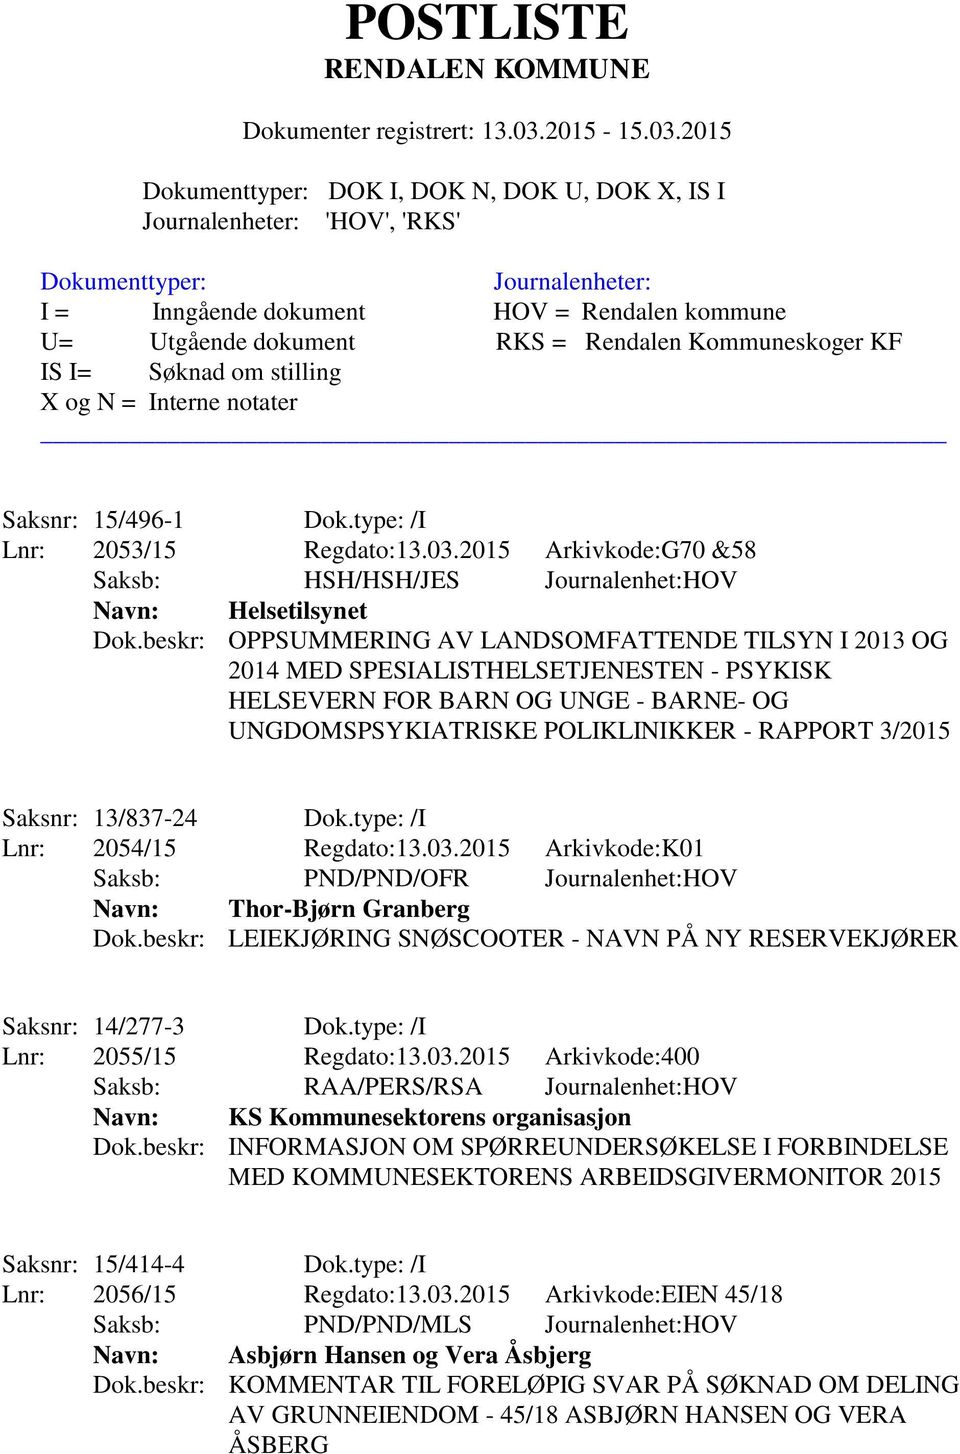 13/837-24 Dok.type: /I Lnr: 2054/15 Regdato:13.03.2015 Arkivkode:K01 Saksb: PND/PND/OFR Journalenhet:HOV Navn: Thor-Bjørn Granberg Dok.